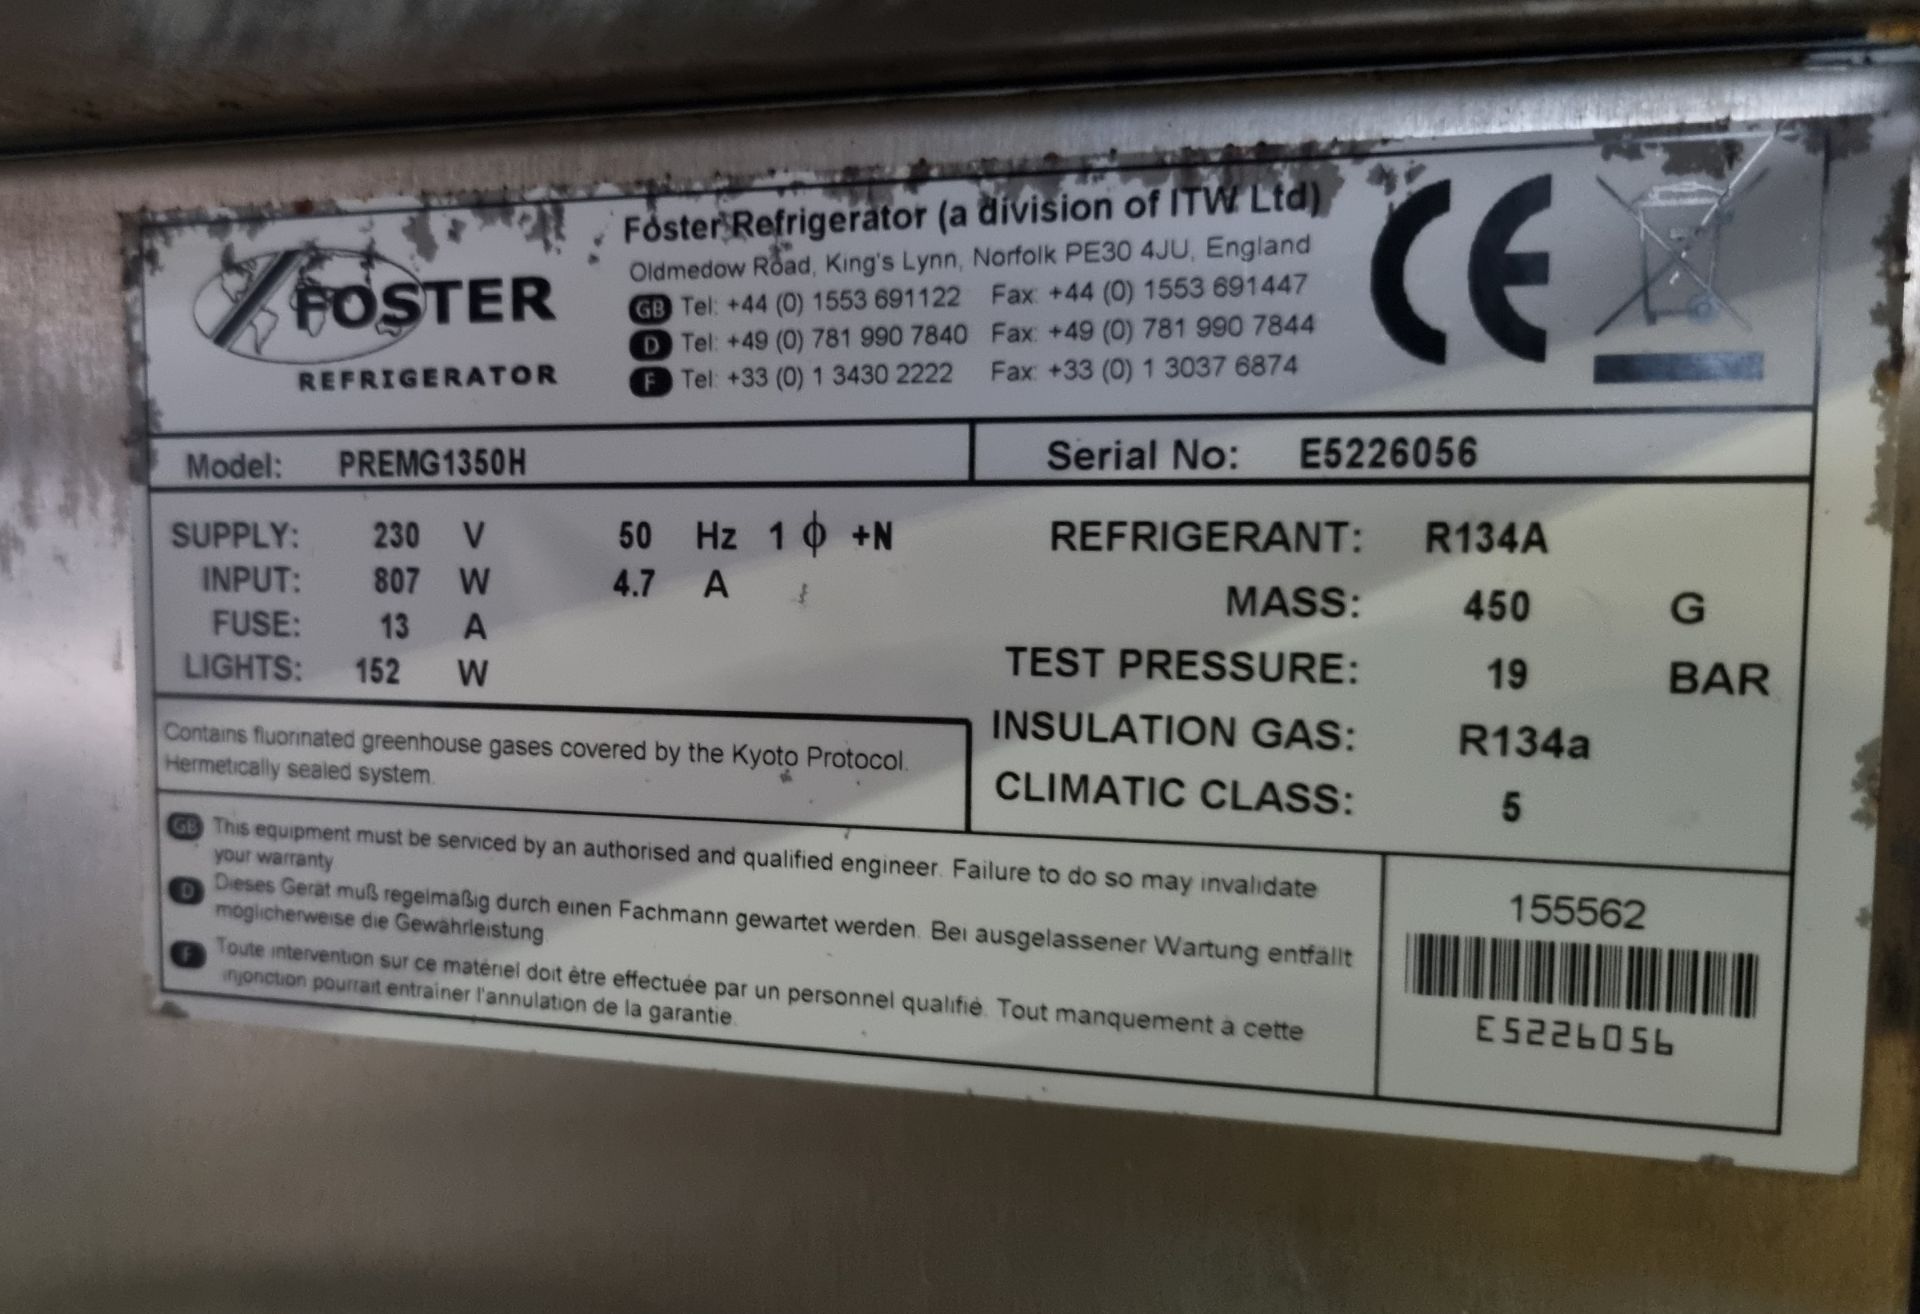 Foster PREMG 1350H double door upright fridge - L 150 x W 83 x H 208cm - Image 4 of 4